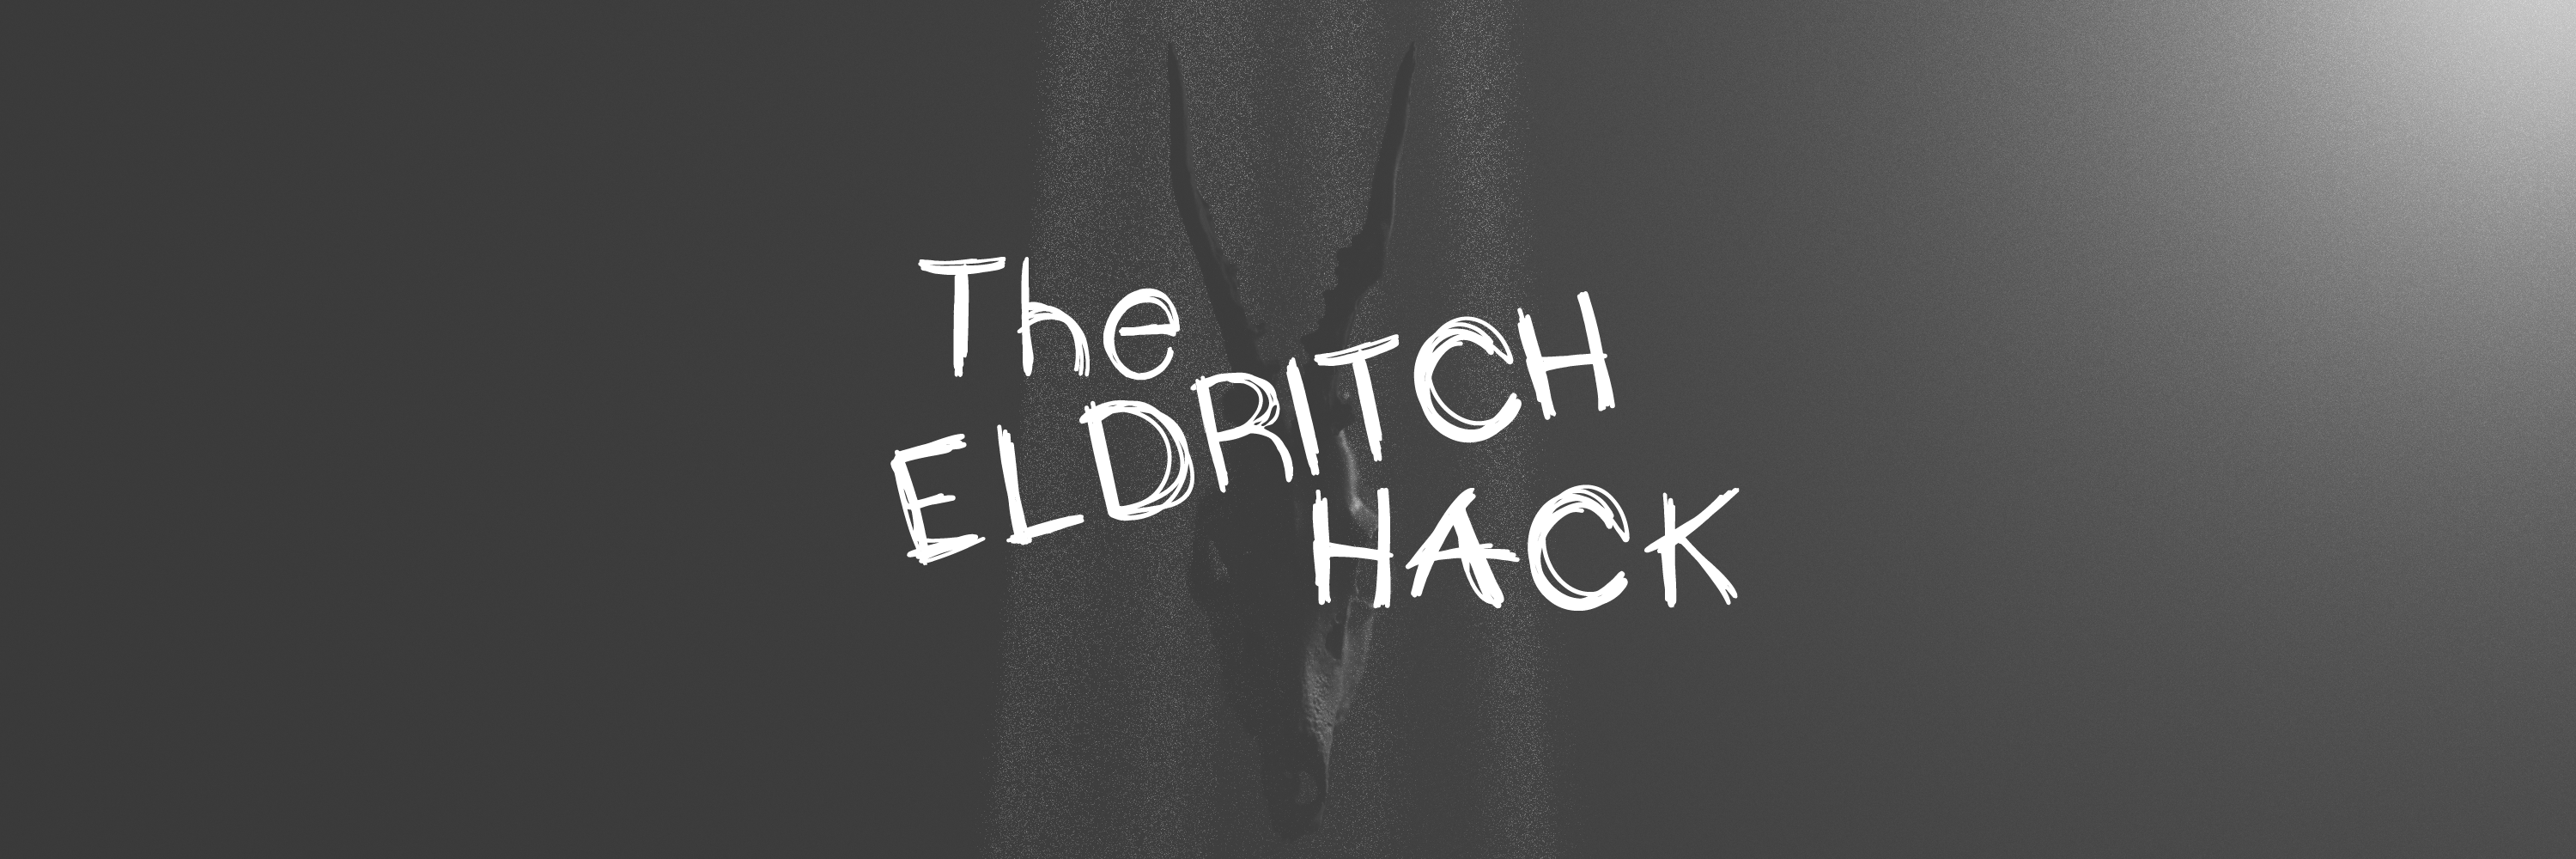 The Eldritch Hack